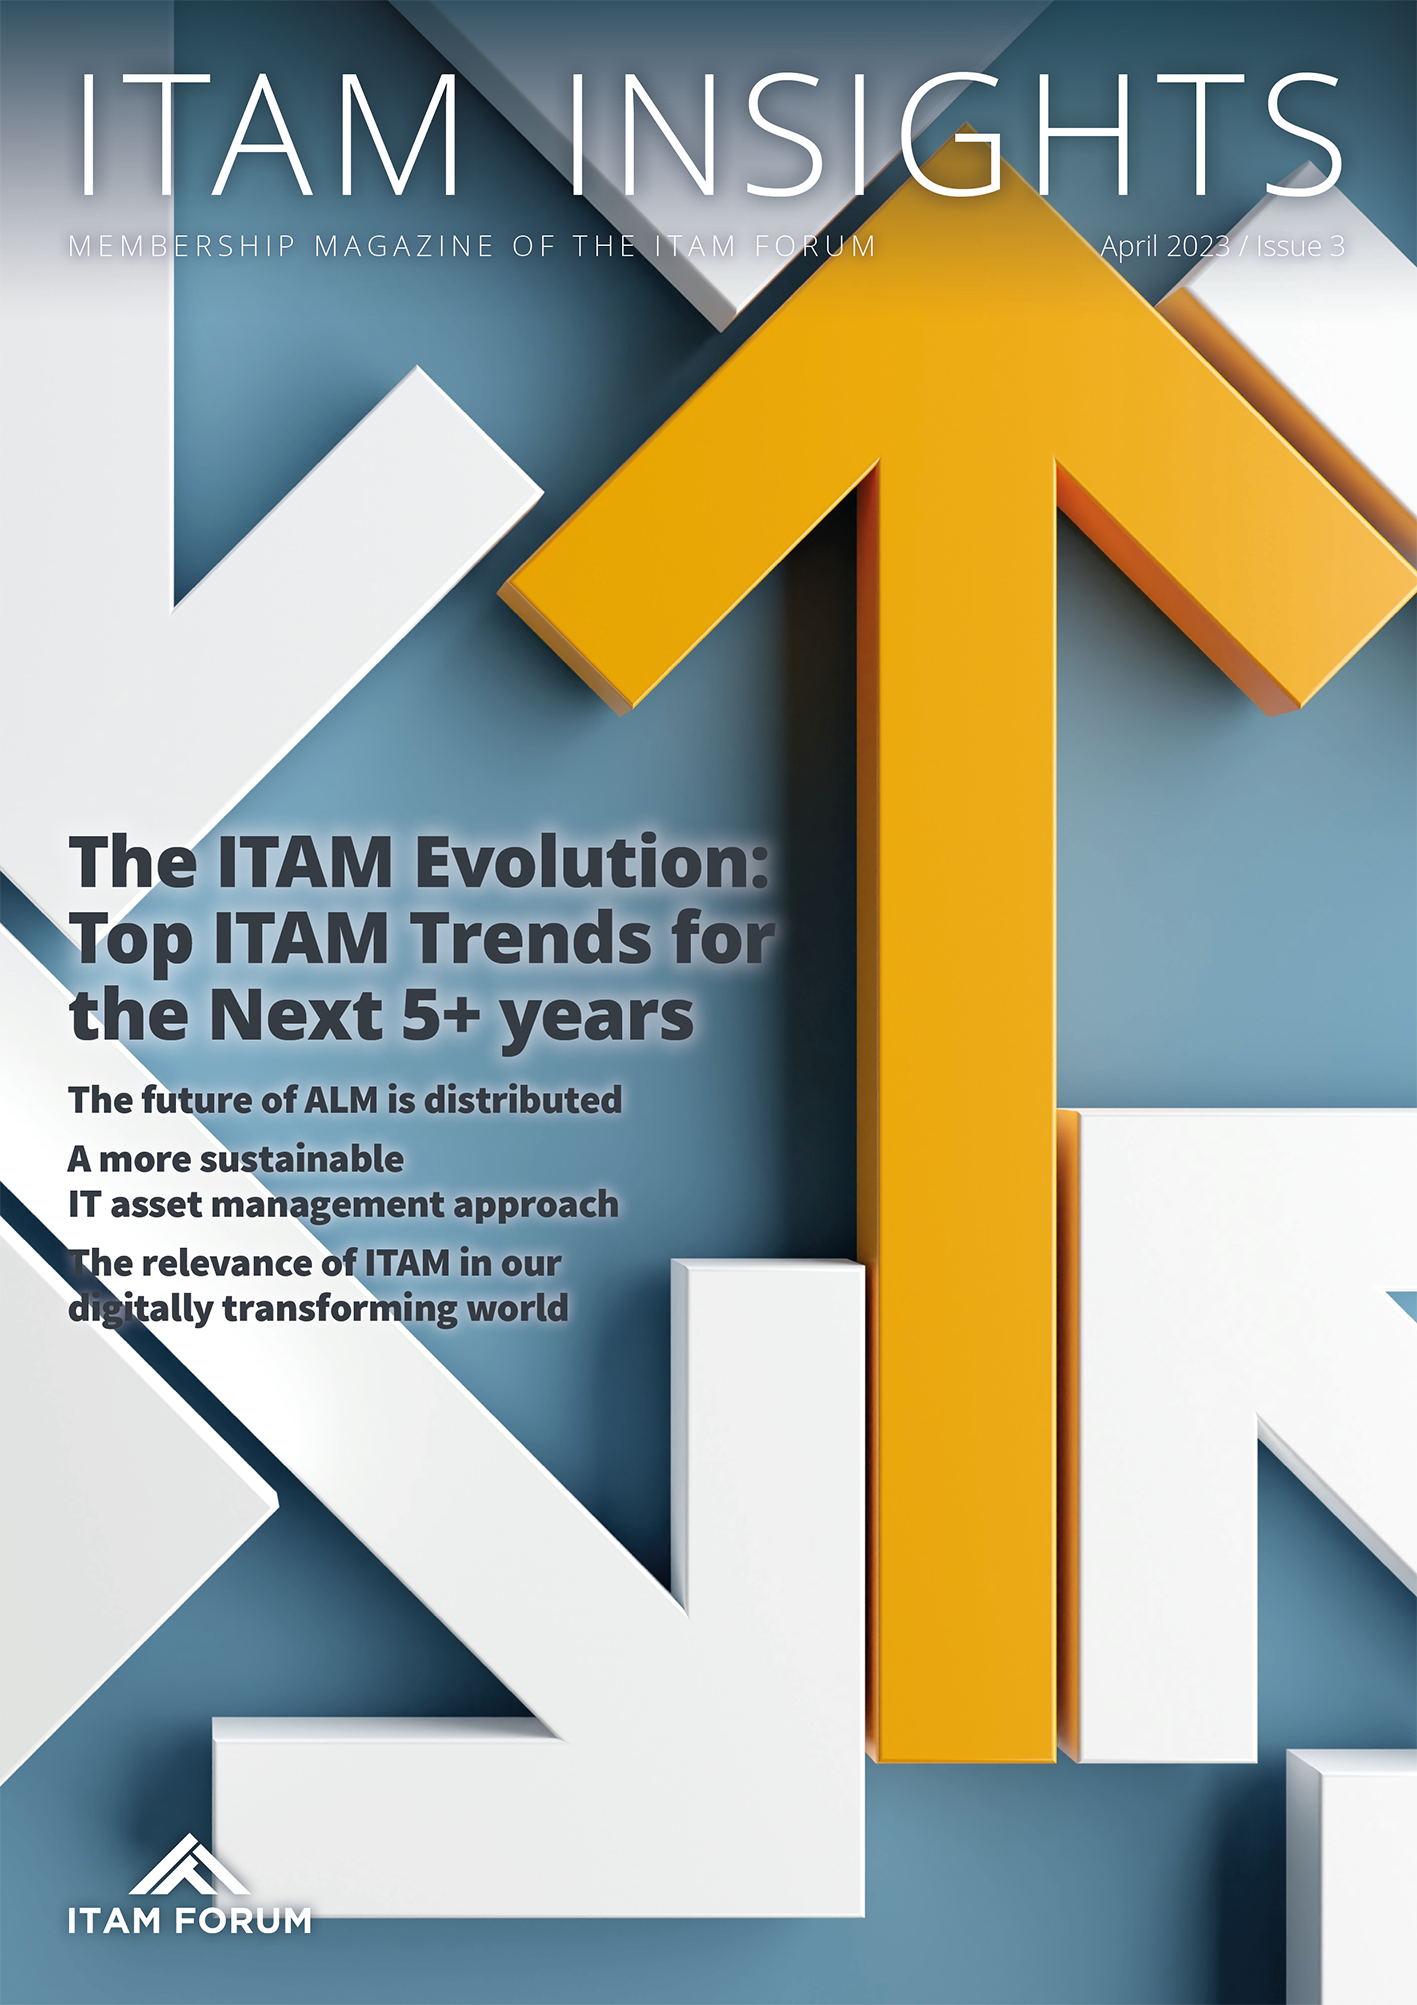 ITAM Insights Issue 3